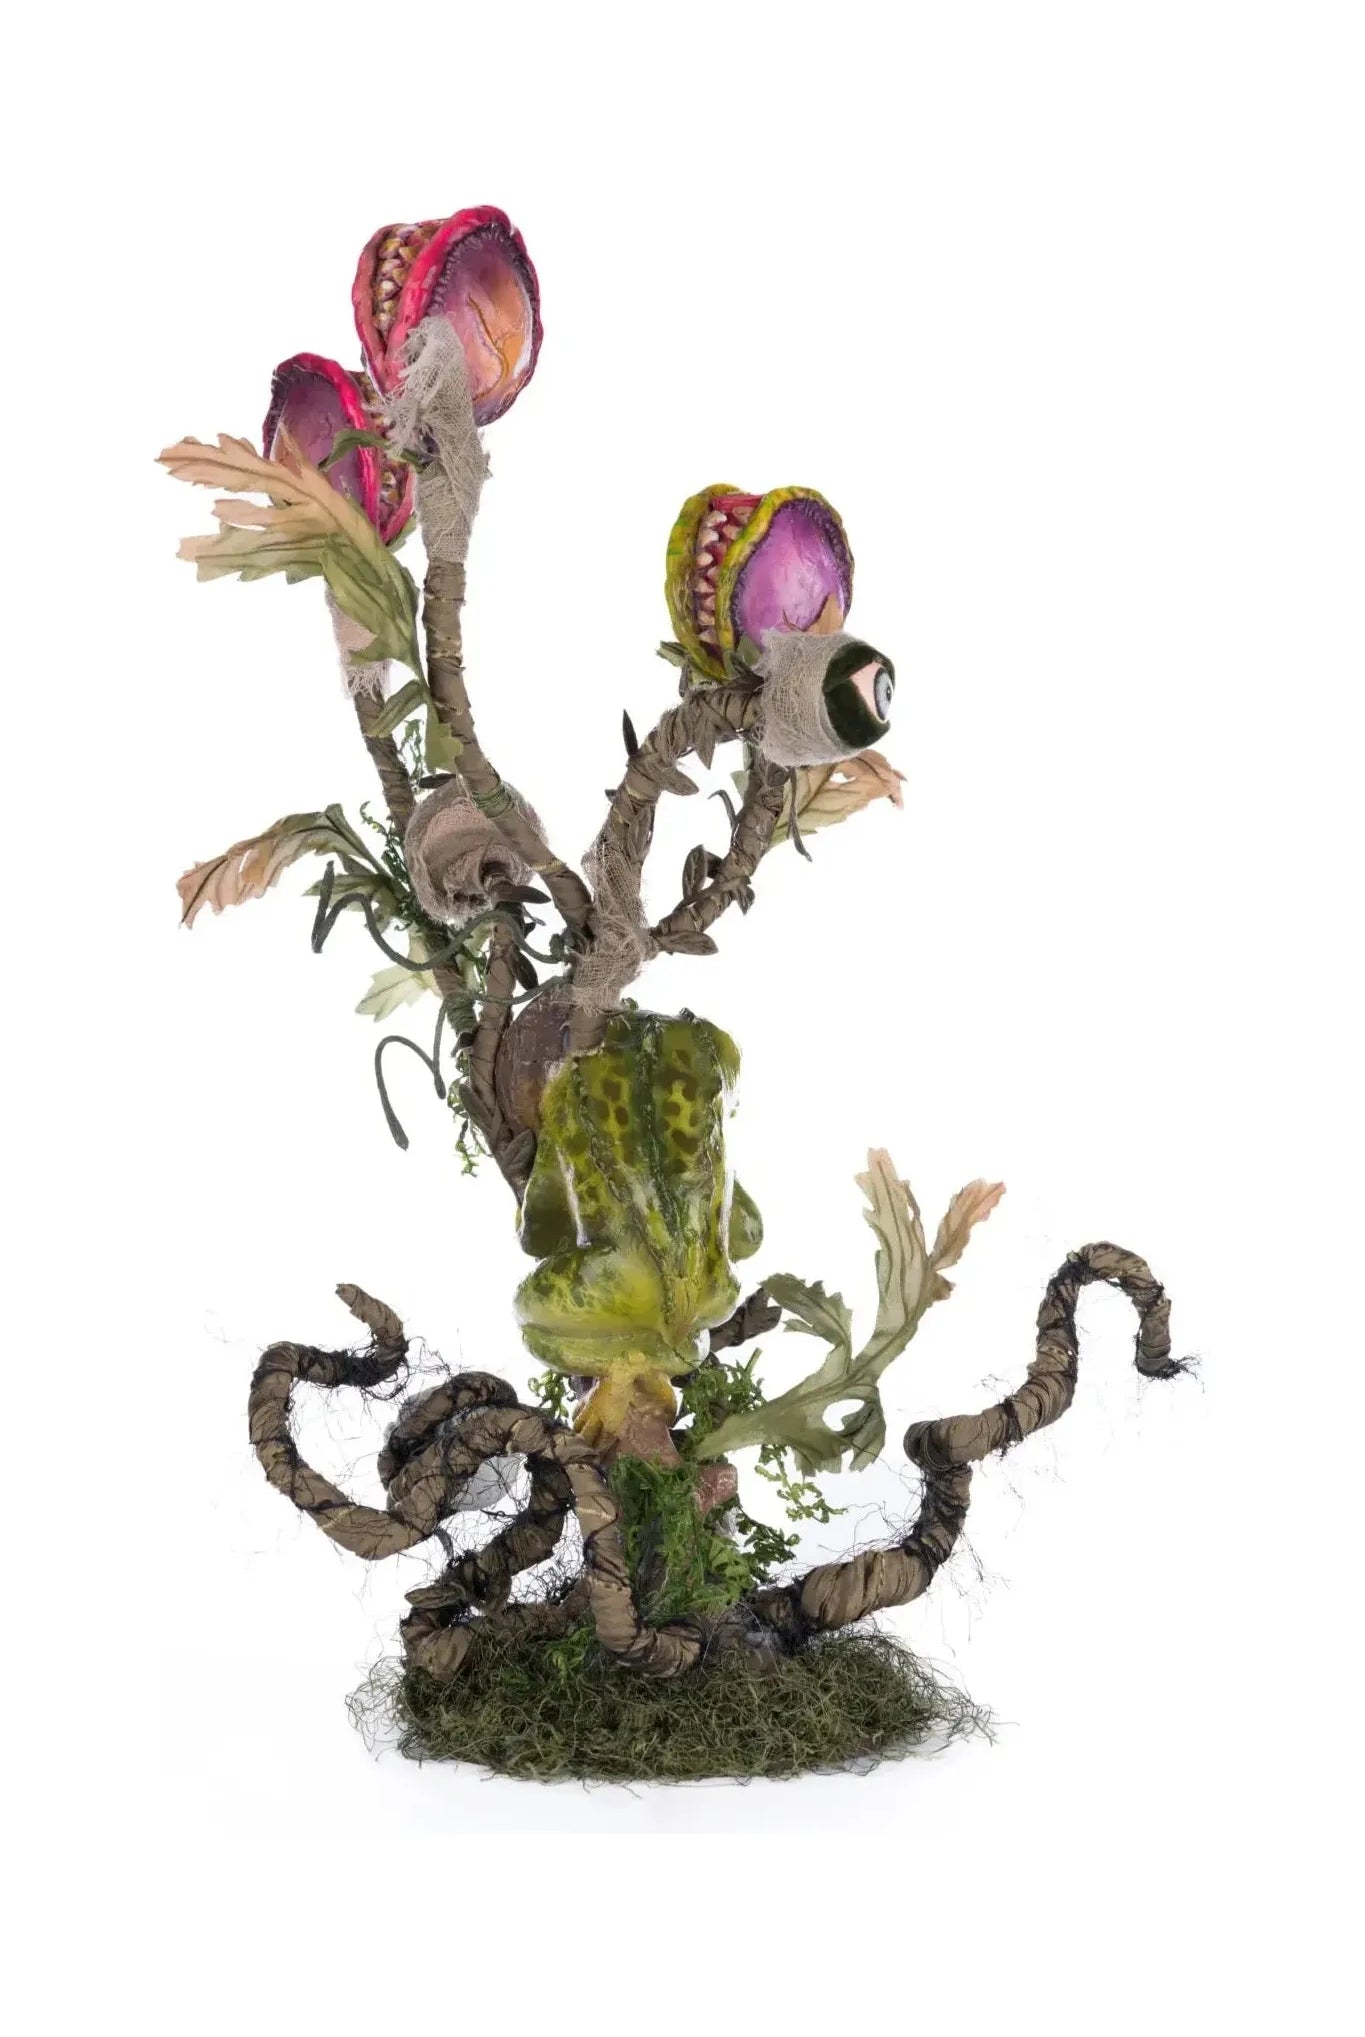 Enchanted Plant Candelabra - Michelle's aDOORable Creations - Halloween Decor